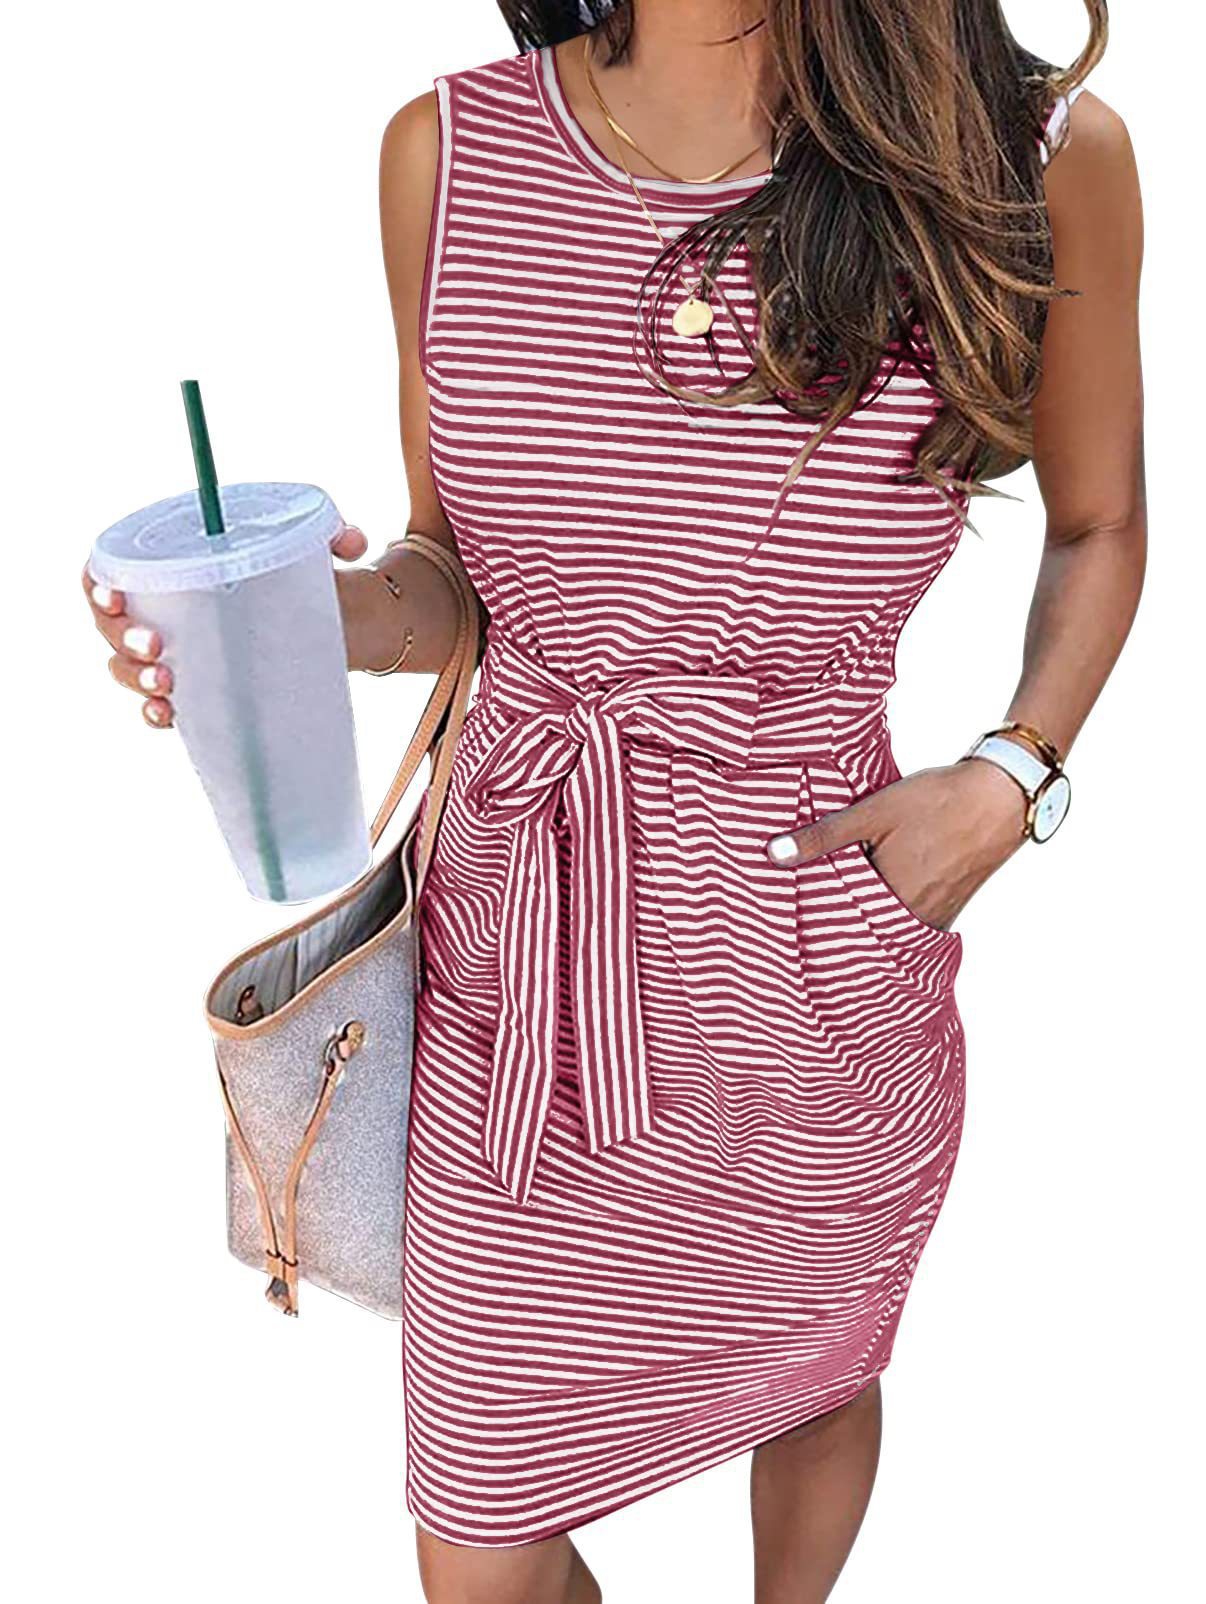 Basic Model Women's Dress Summer Sleeveless Striped Lace-up Round Neck Vest